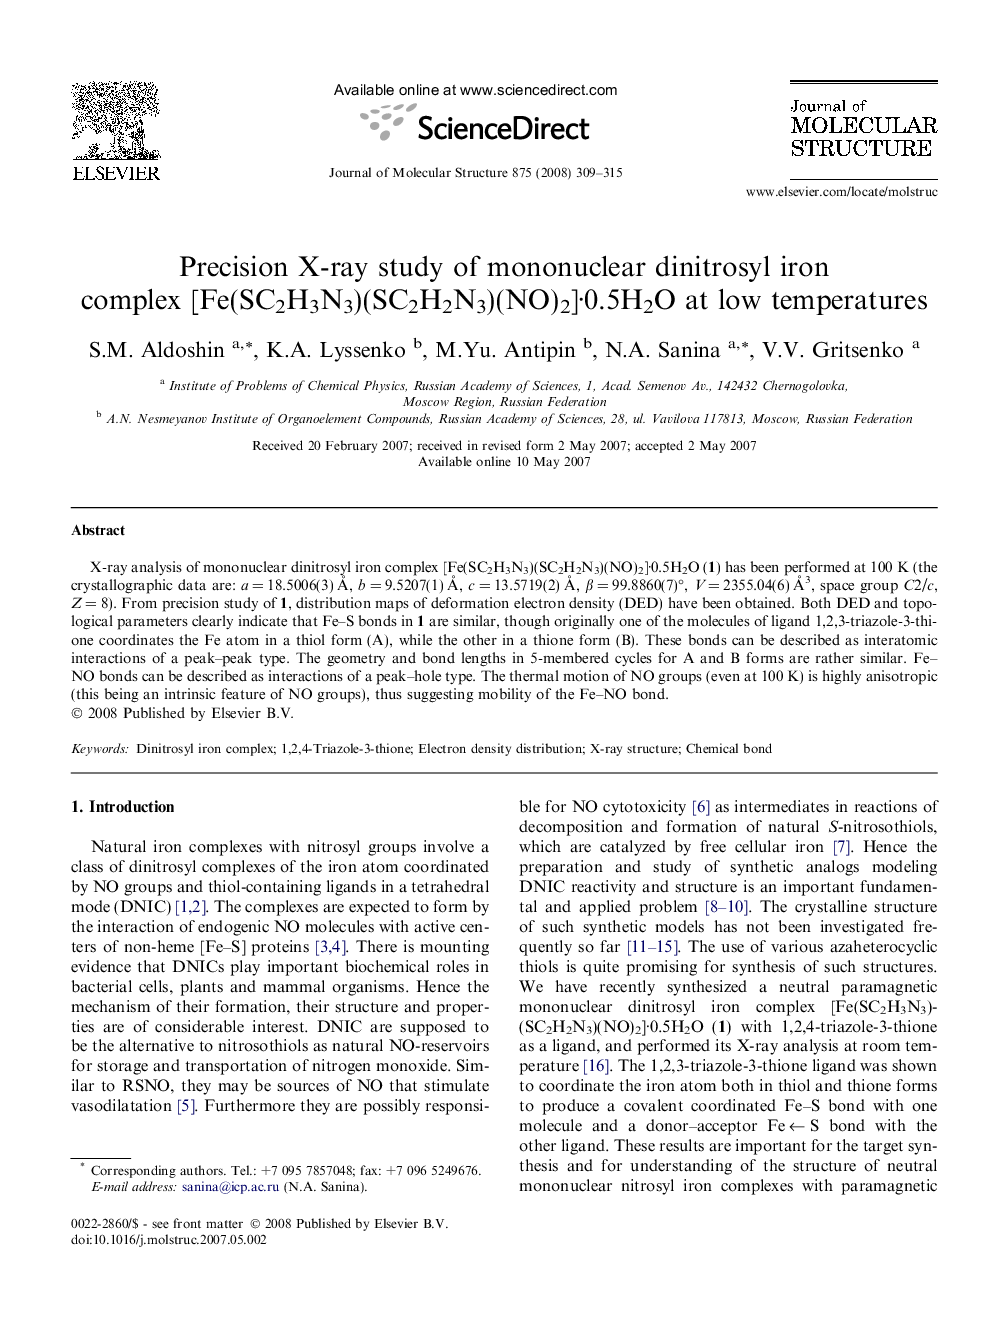 Precision X-ray study of mononuclear dinitrosyl iron complex [Fe(SC2H3N3)(SC2H2N3)(NO)2]Â·0.5H2O at low temperatures